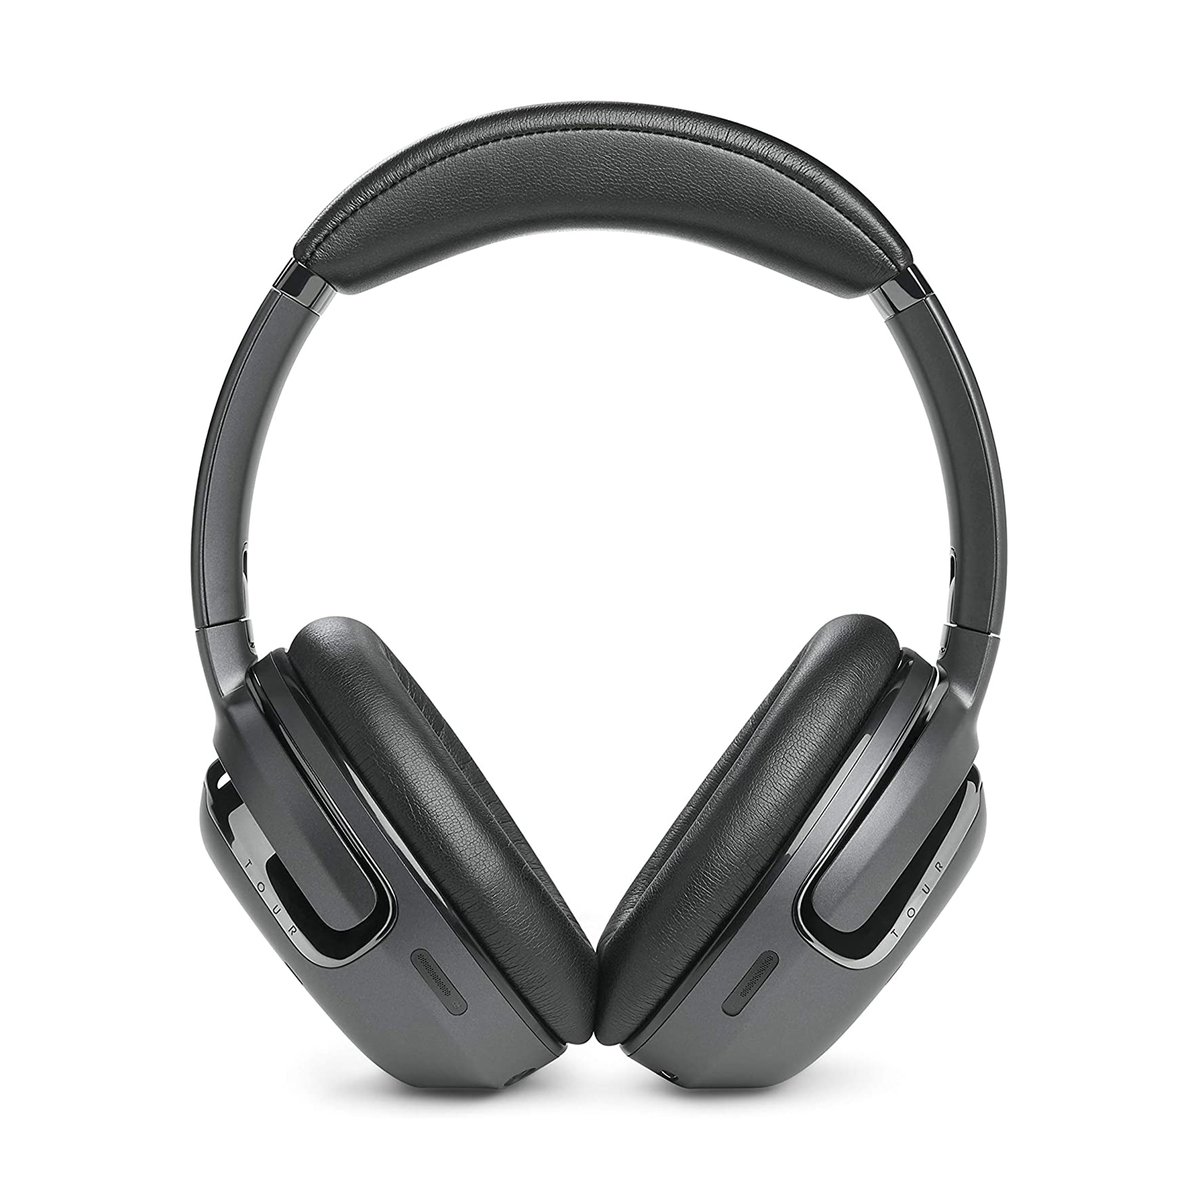 JBL Noise Cancelling Bluetooth Headphones JBLTOURONEBLK